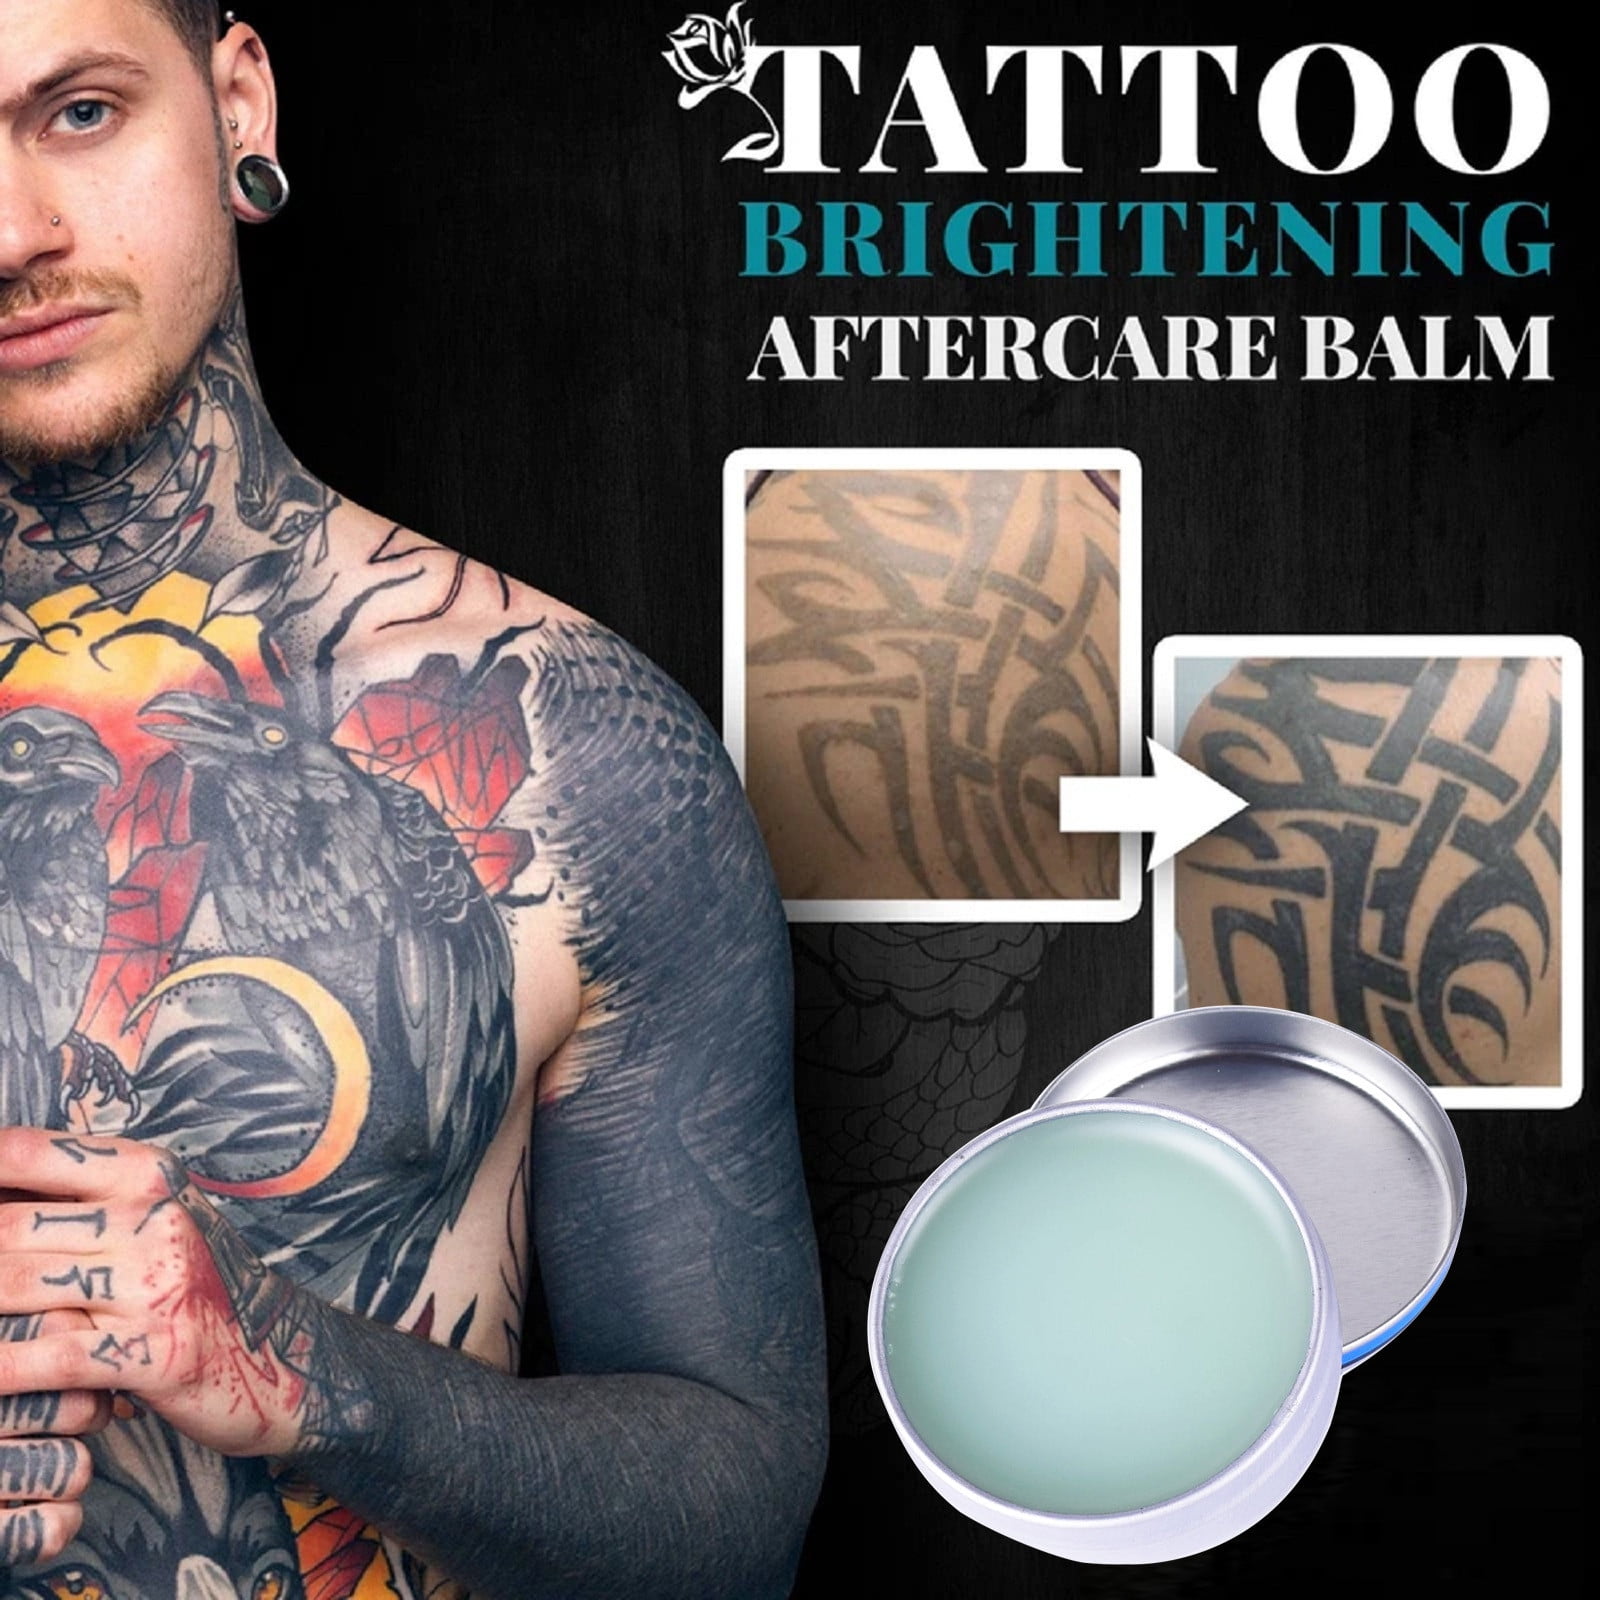 BEFOKA Tattoos Enhance Balm Aftercare Cream Tattoos Brightener Moisturizer for Color Enhancement All Natural cfc5a783 4355 46a3 a7a0 9517df625f25.f6eca6ff7ca6e7f4c60d3ccc29e0289b